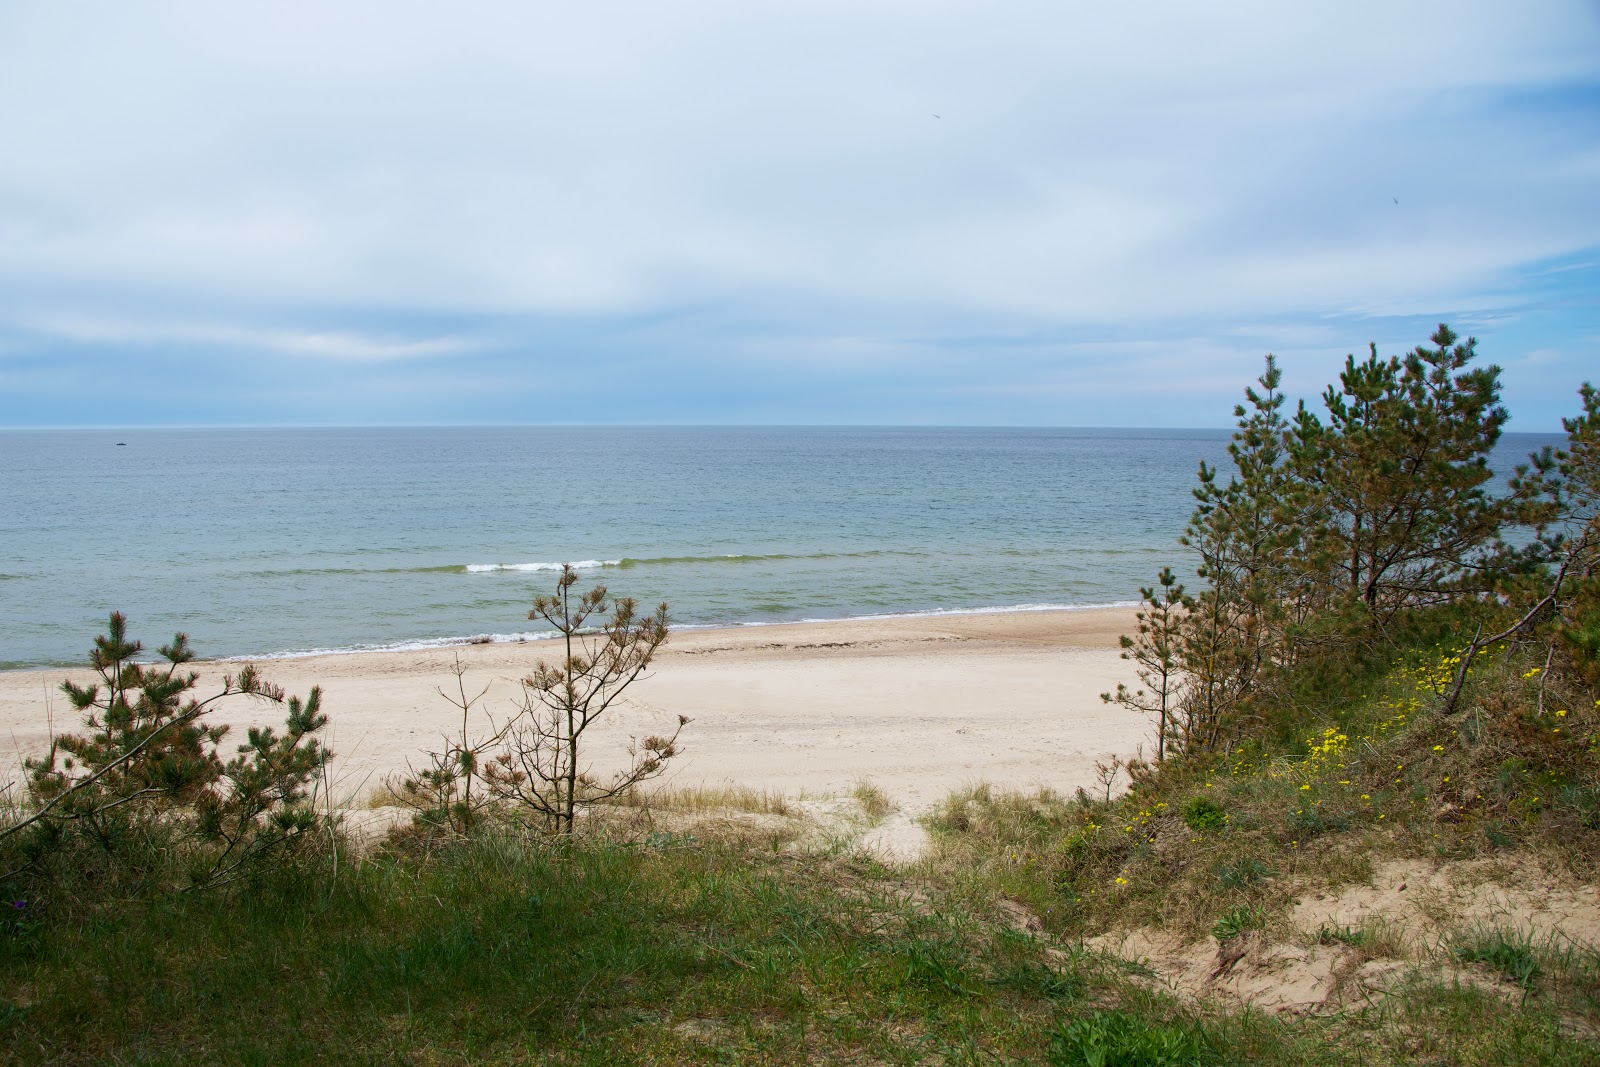 Fotografija Ziemupes beach nahaja se v naravnem okolju